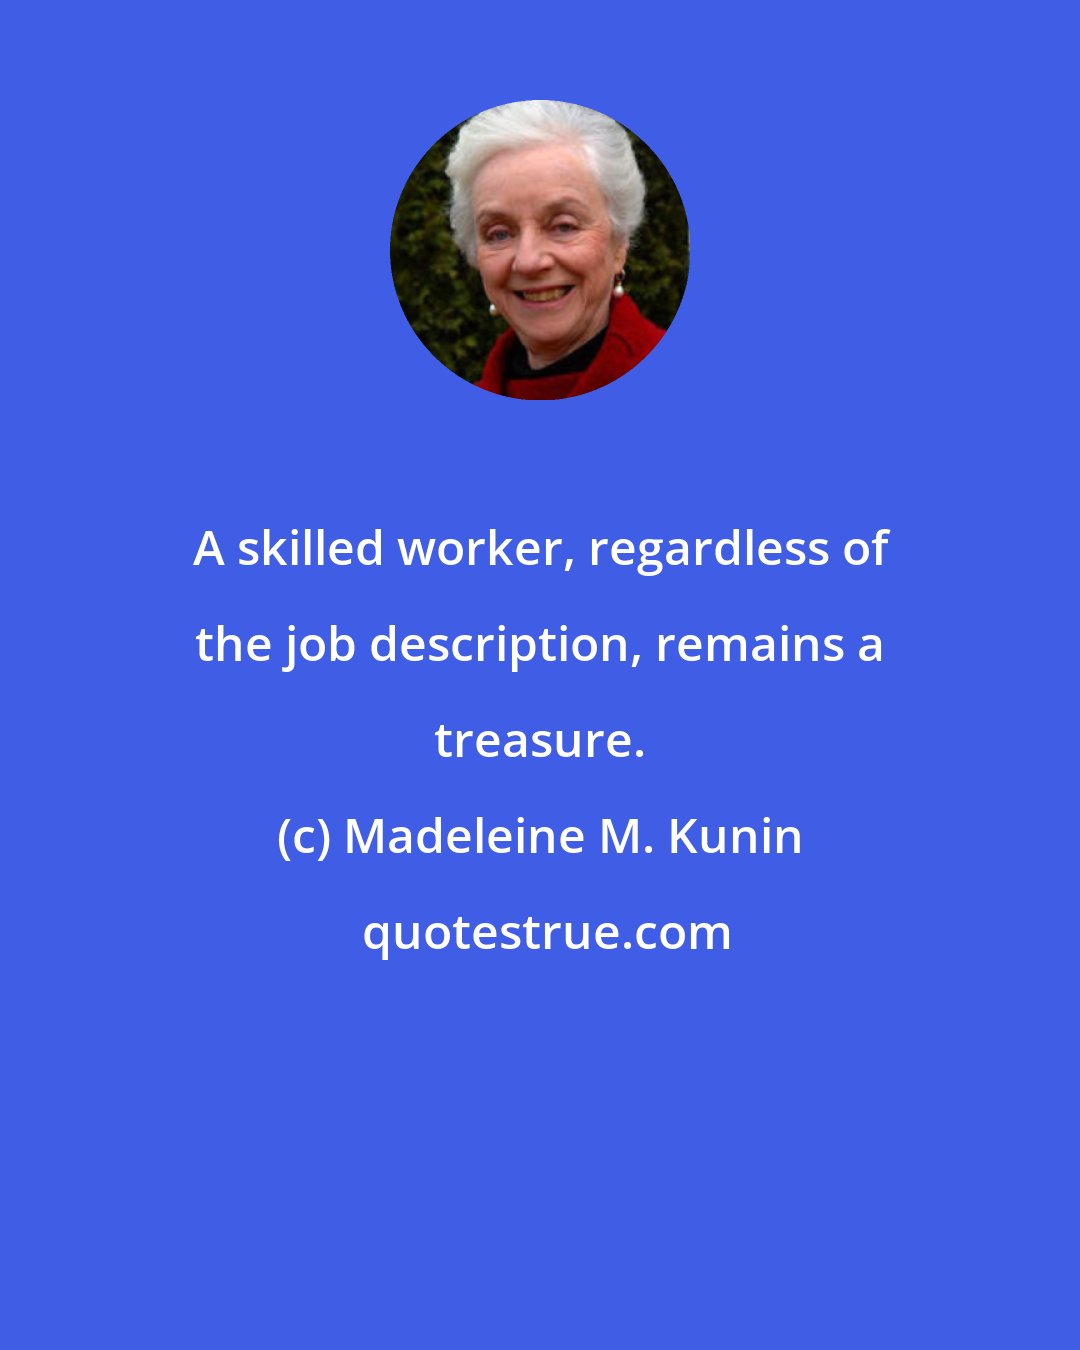 Madeleine M. Kunin: A skilled worker, regardless of the job description, remains a treasure.